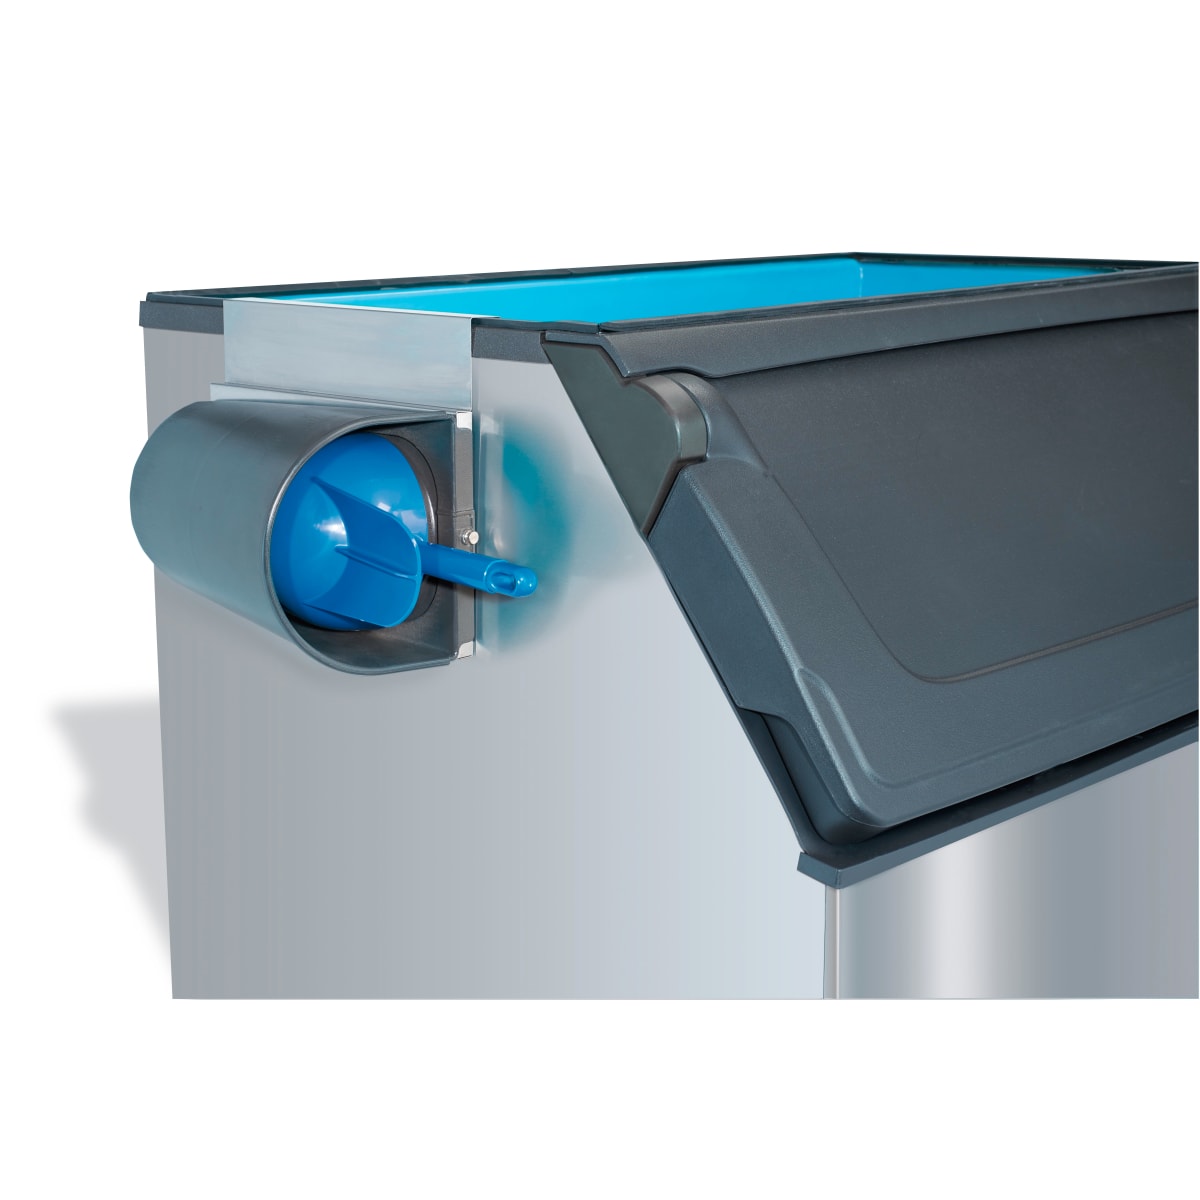 Ice maker scoop holder : r/functionalprint